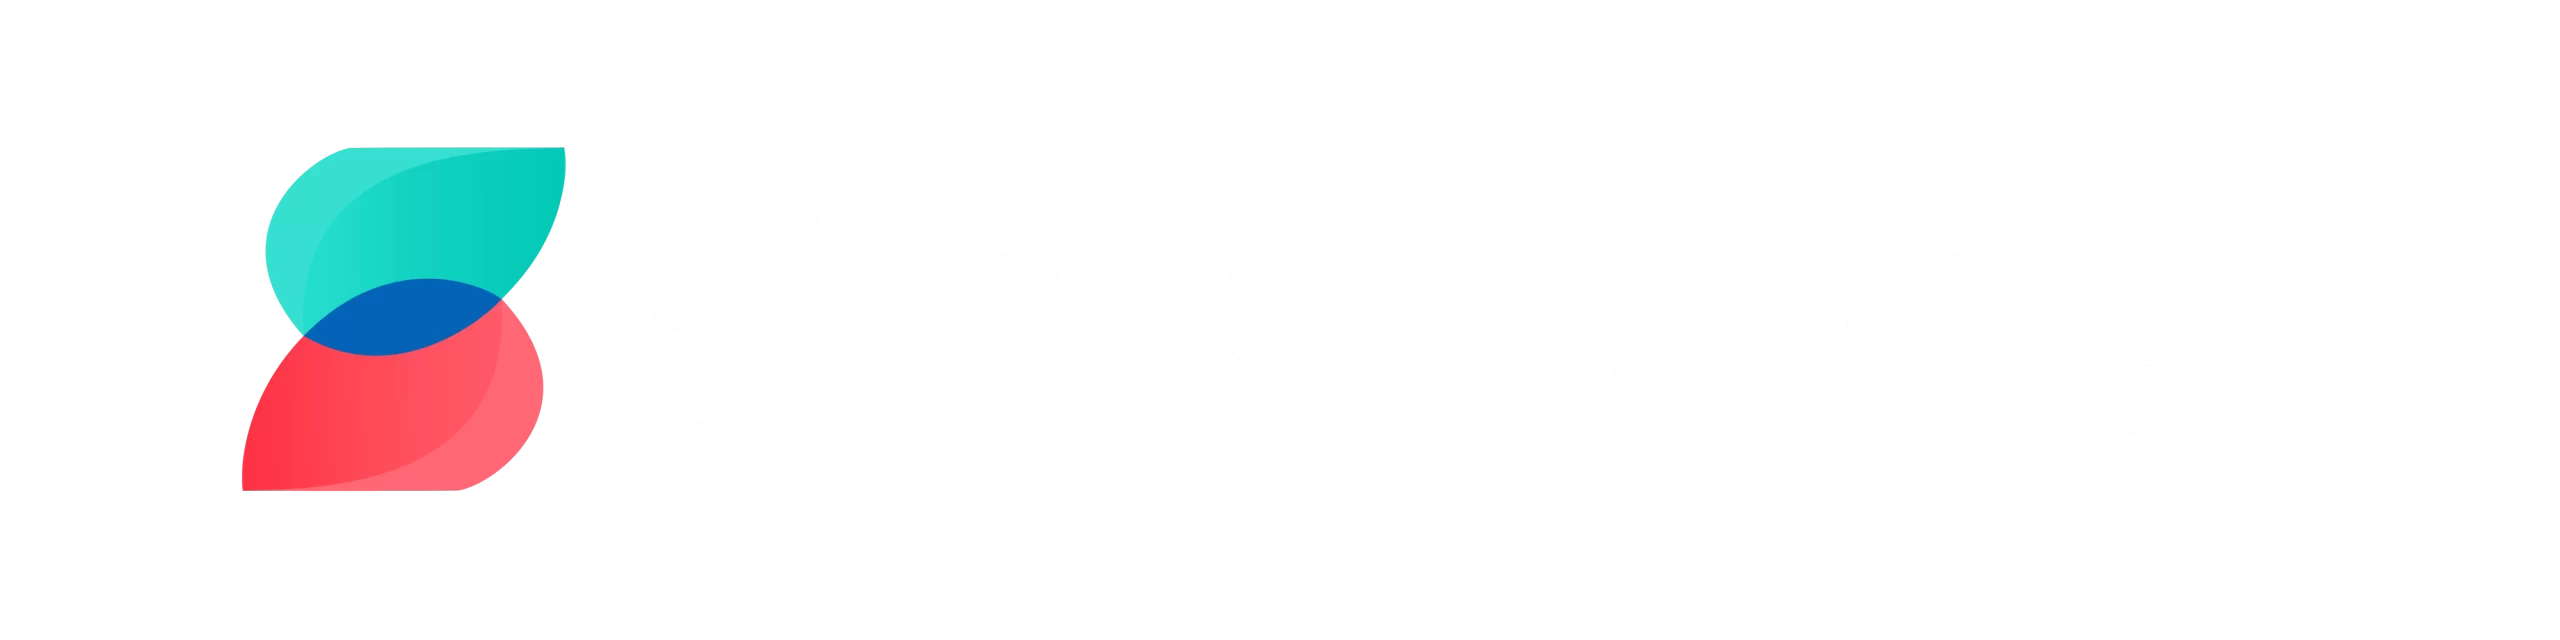 white-sms-local-logo